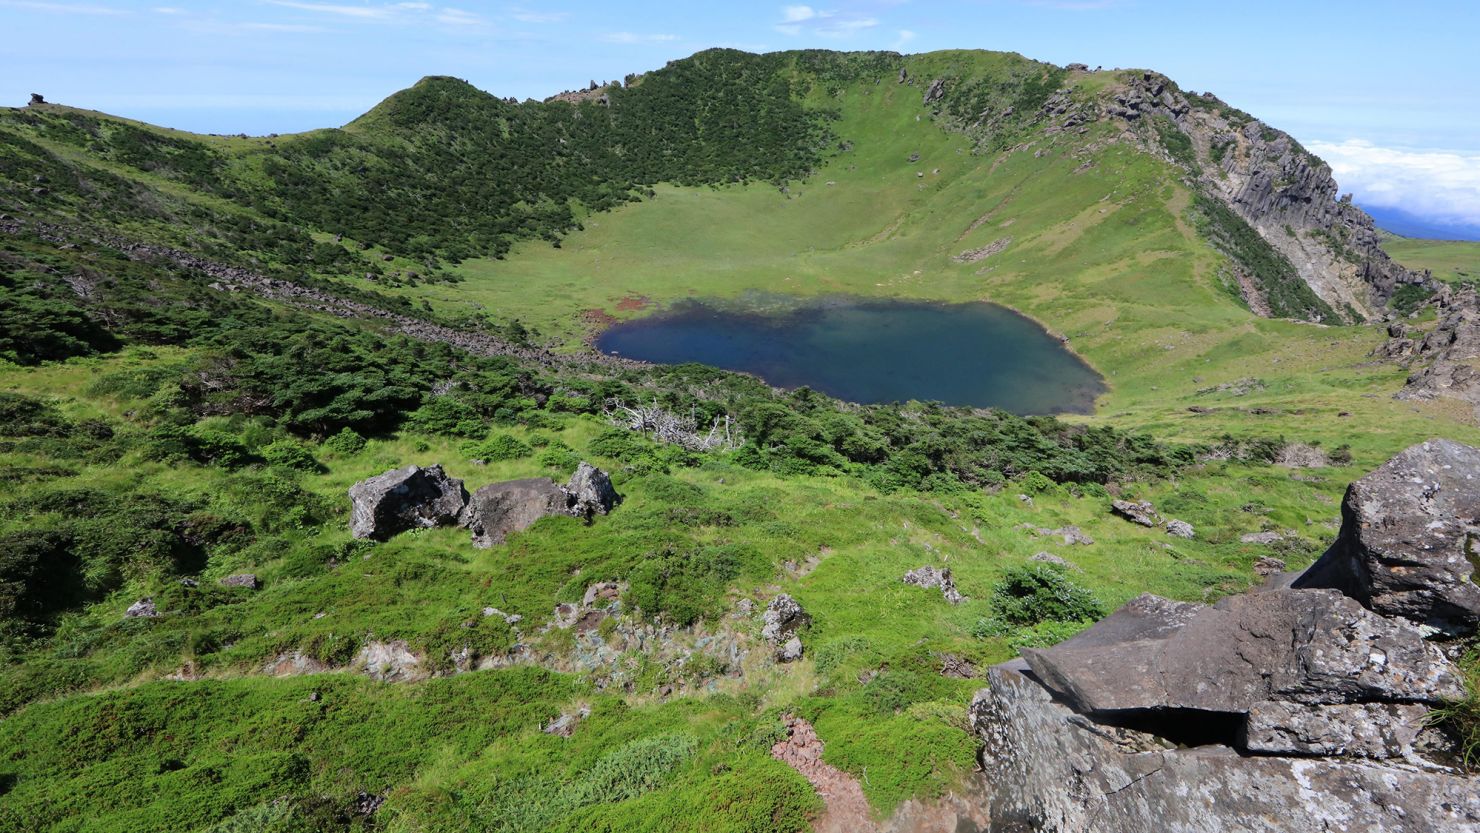 Mount Halla -- Hallasan in Korean -- is located on South Korea's Jeju Island.